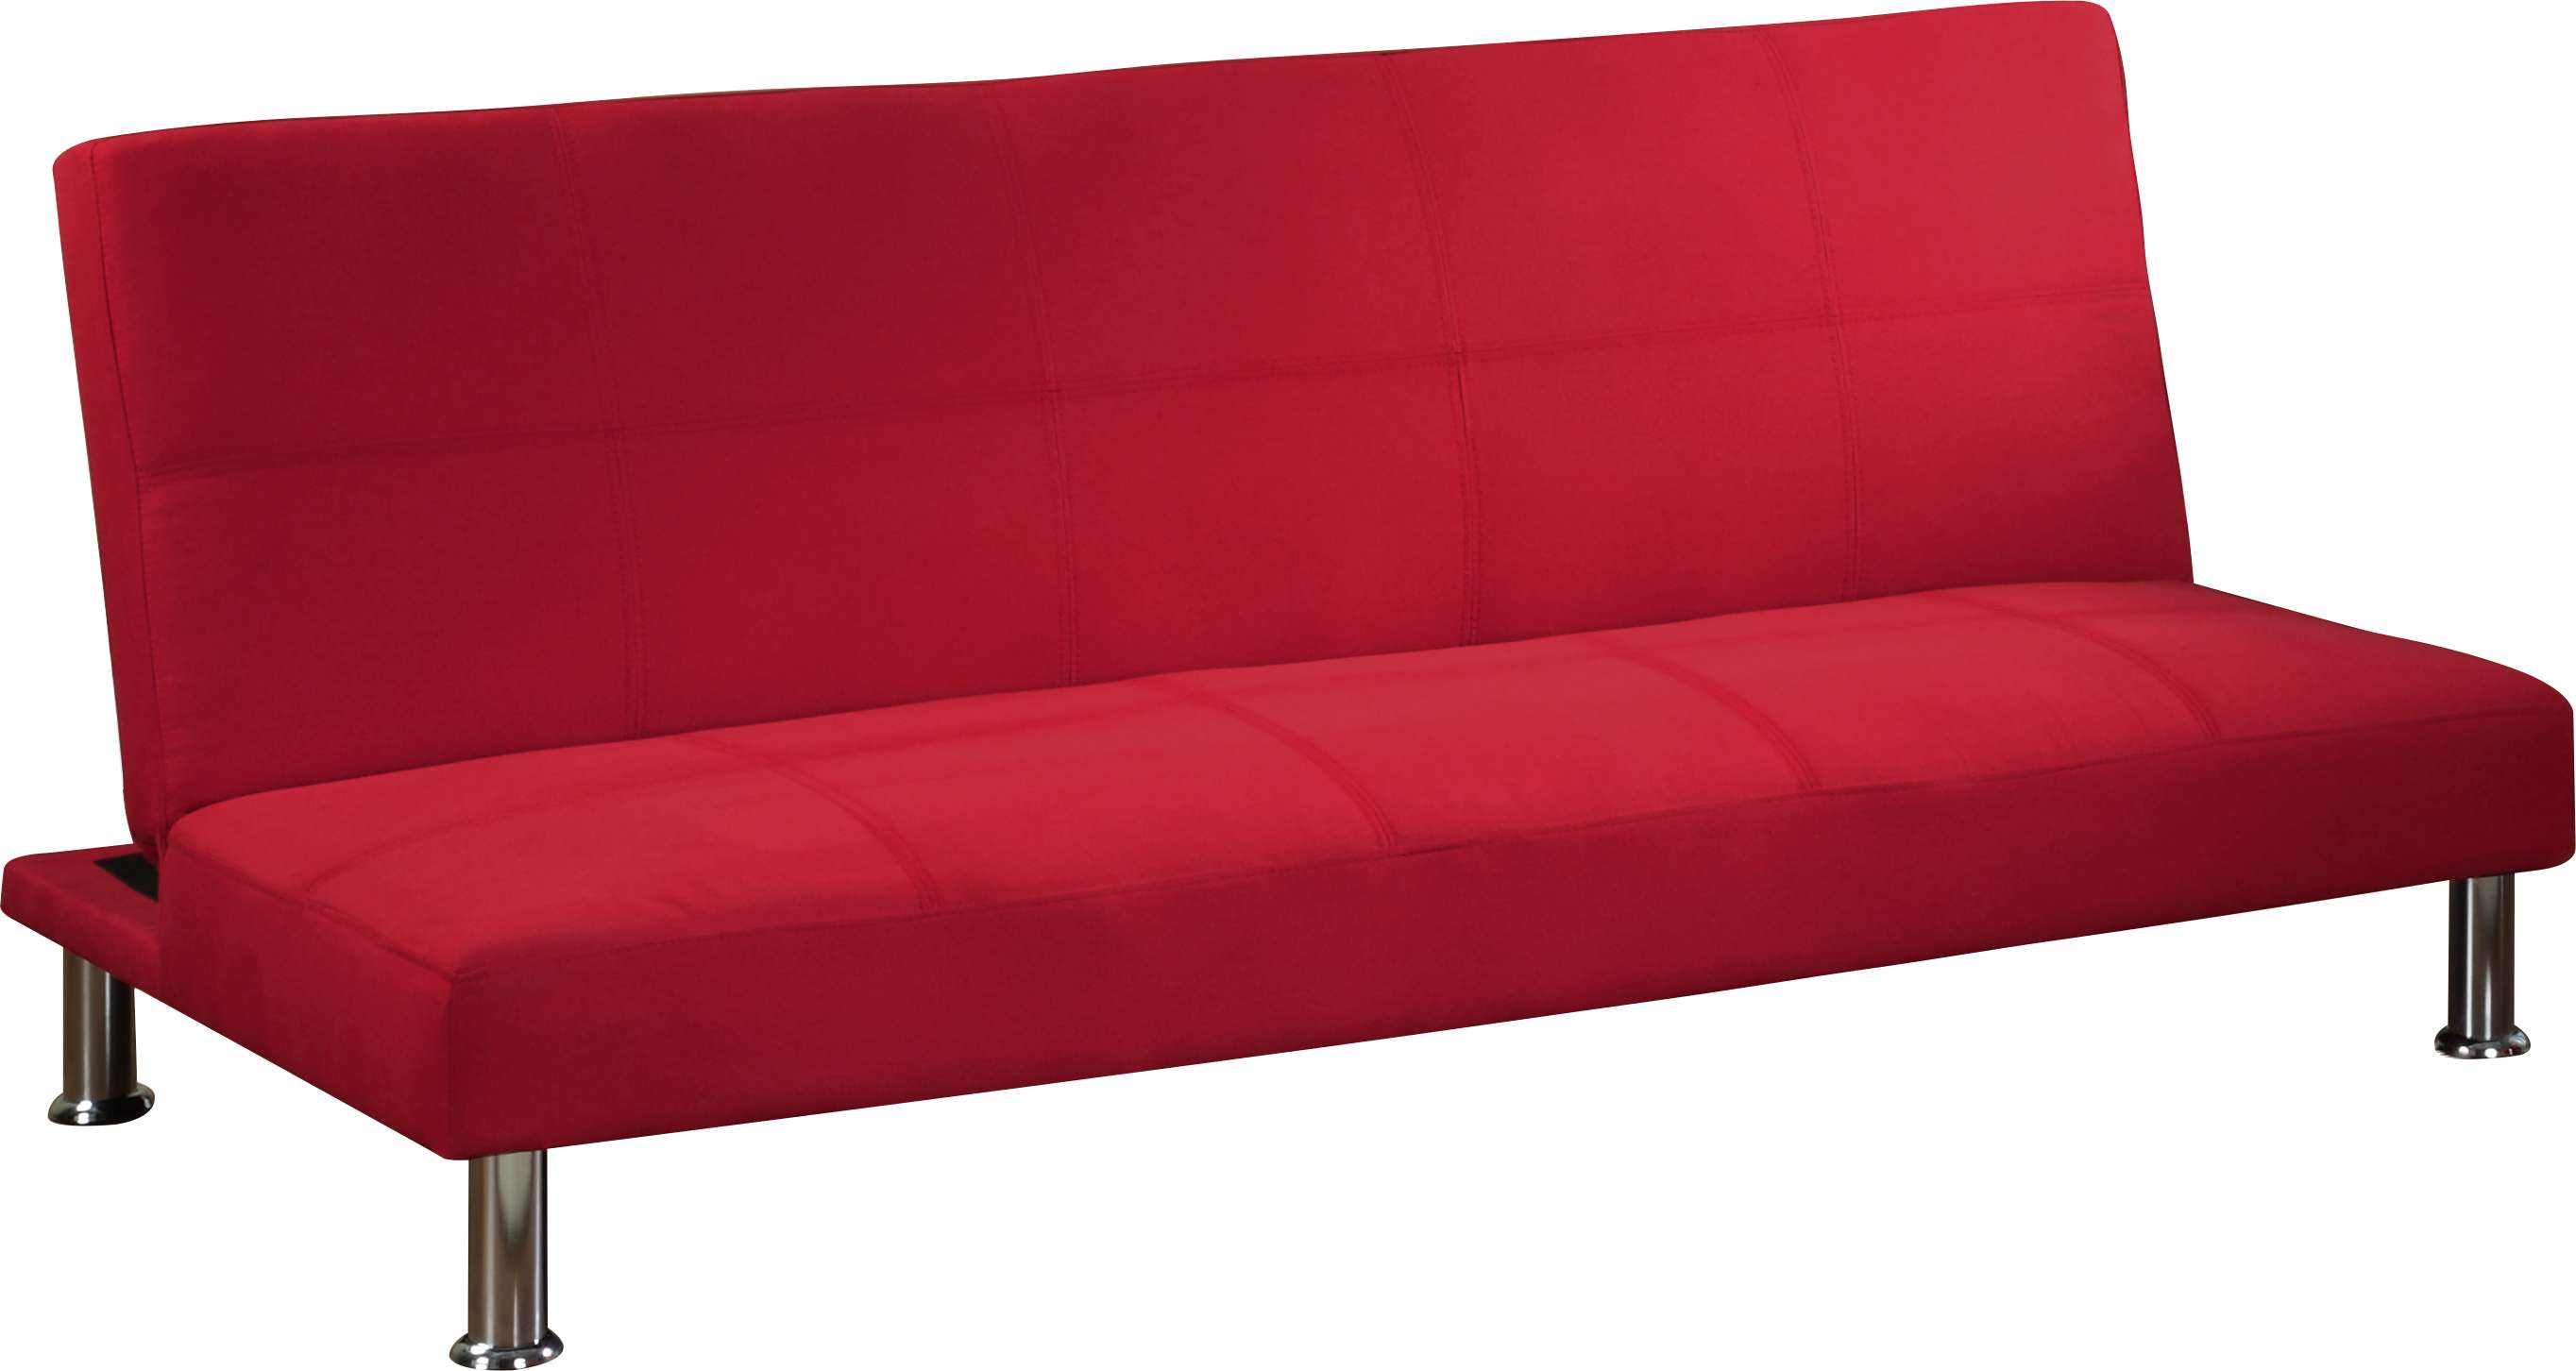 Pilaster Designs - Fabric Klik-Klak Sofa Bed Sleeper | eBay